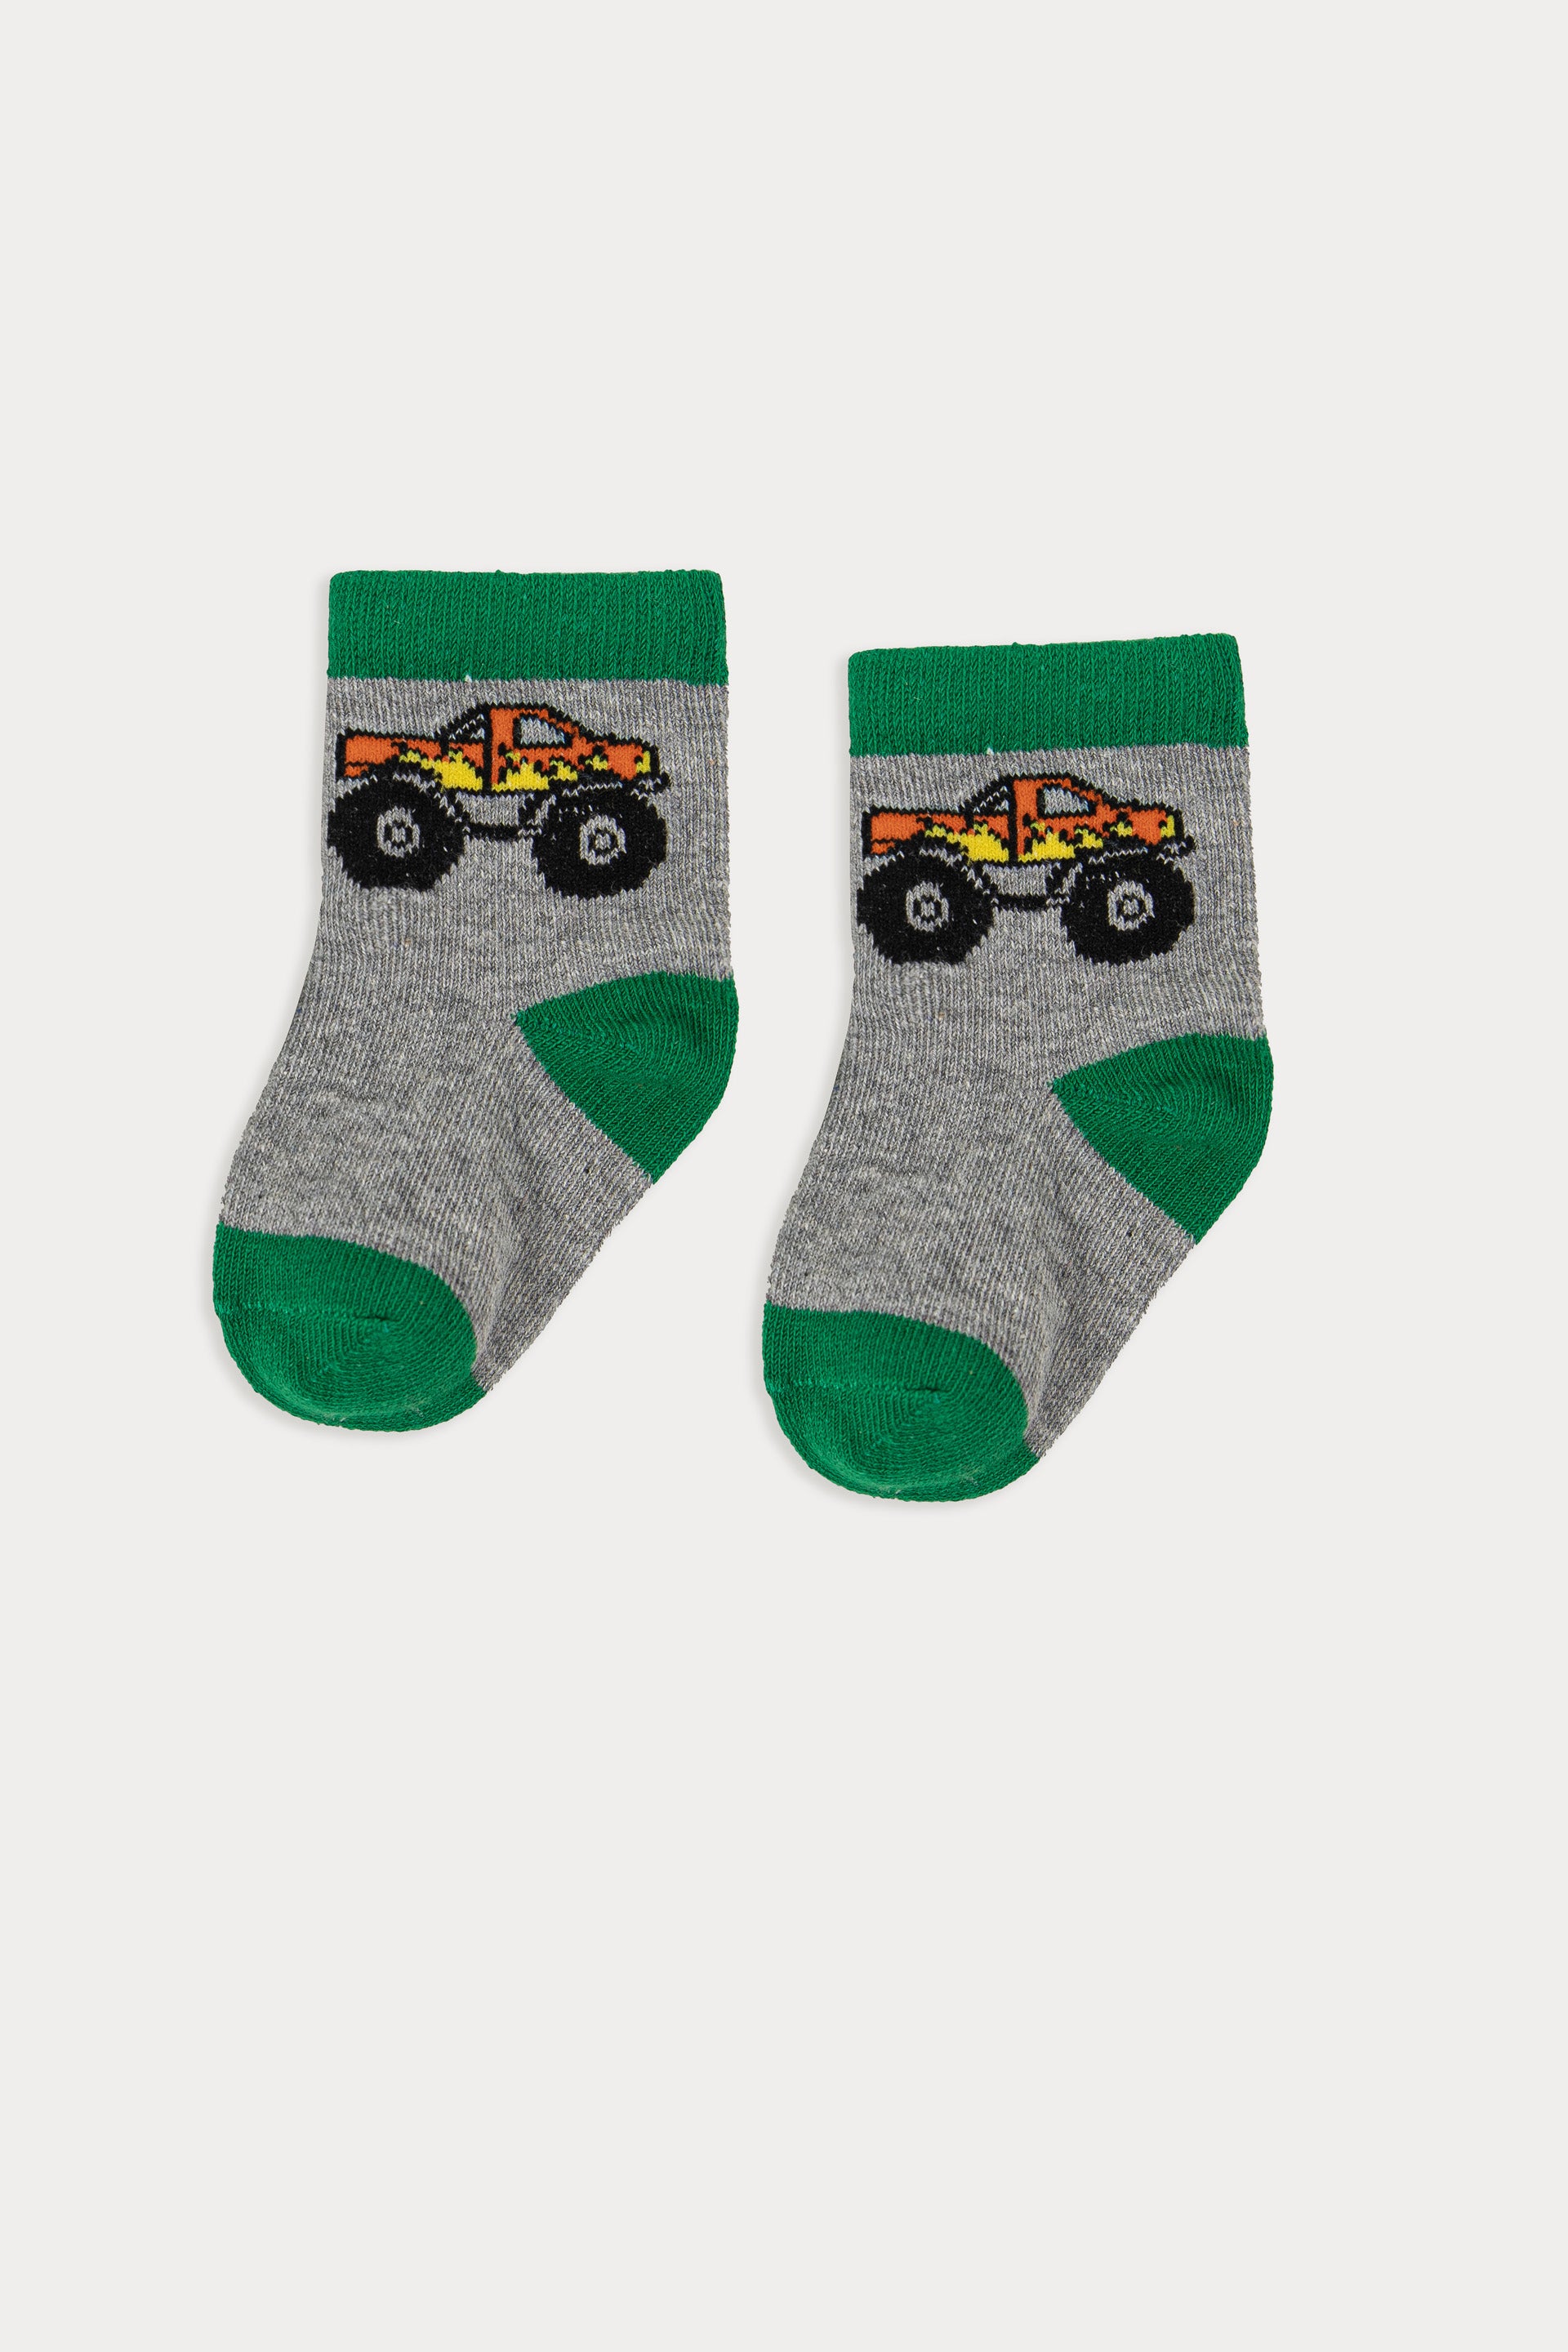 Cars Theme Crew Socks Pack